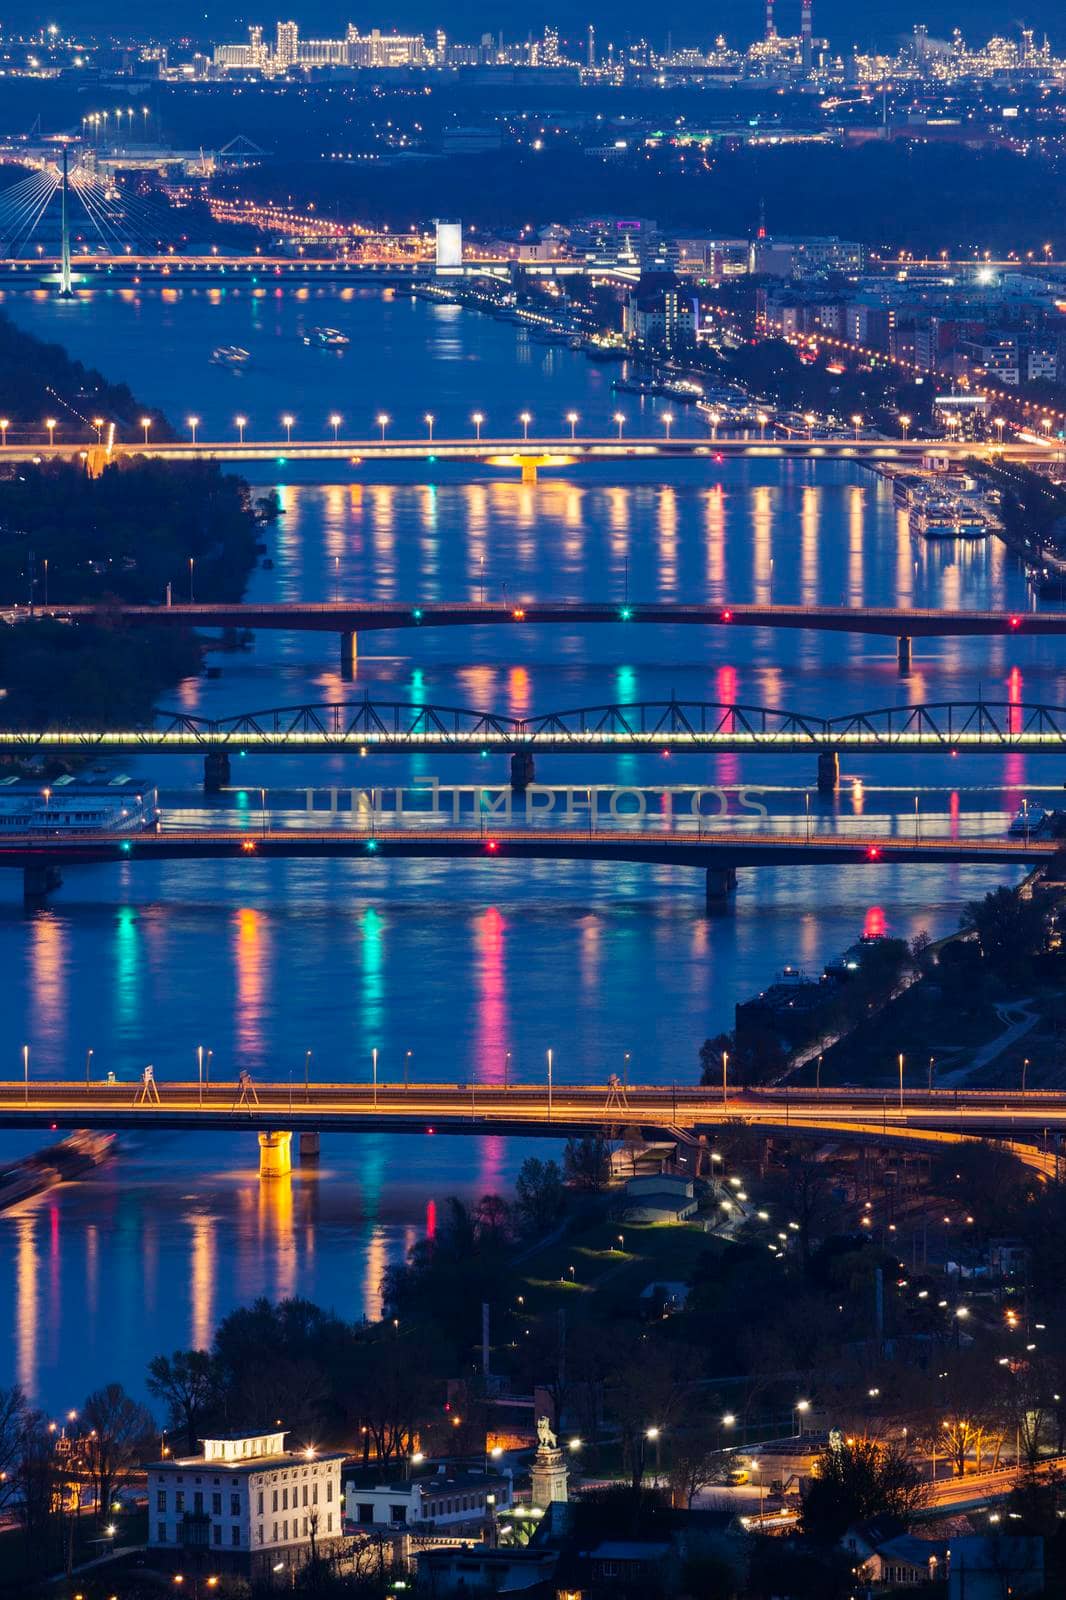 Bridges on Danube River in Vienna by benkrut